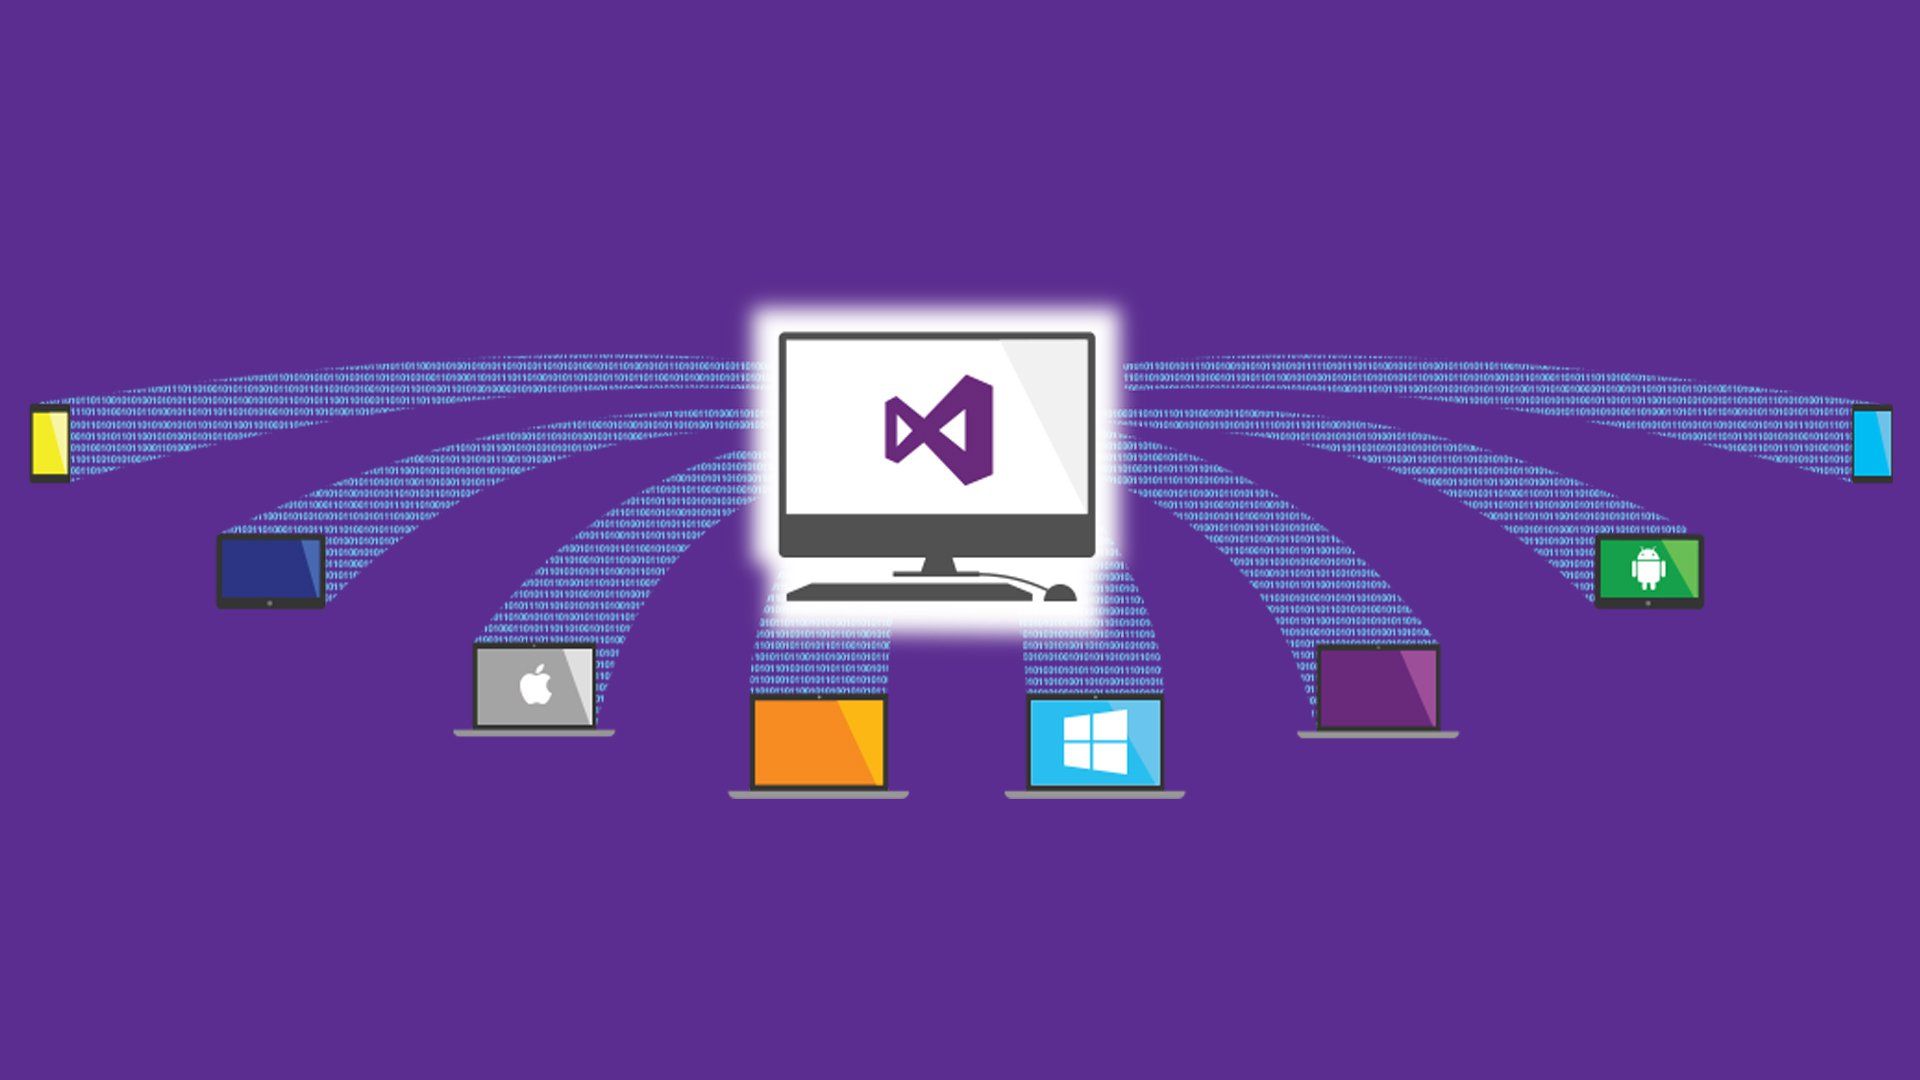 Visual Studio Wallpaper. Visual Studio